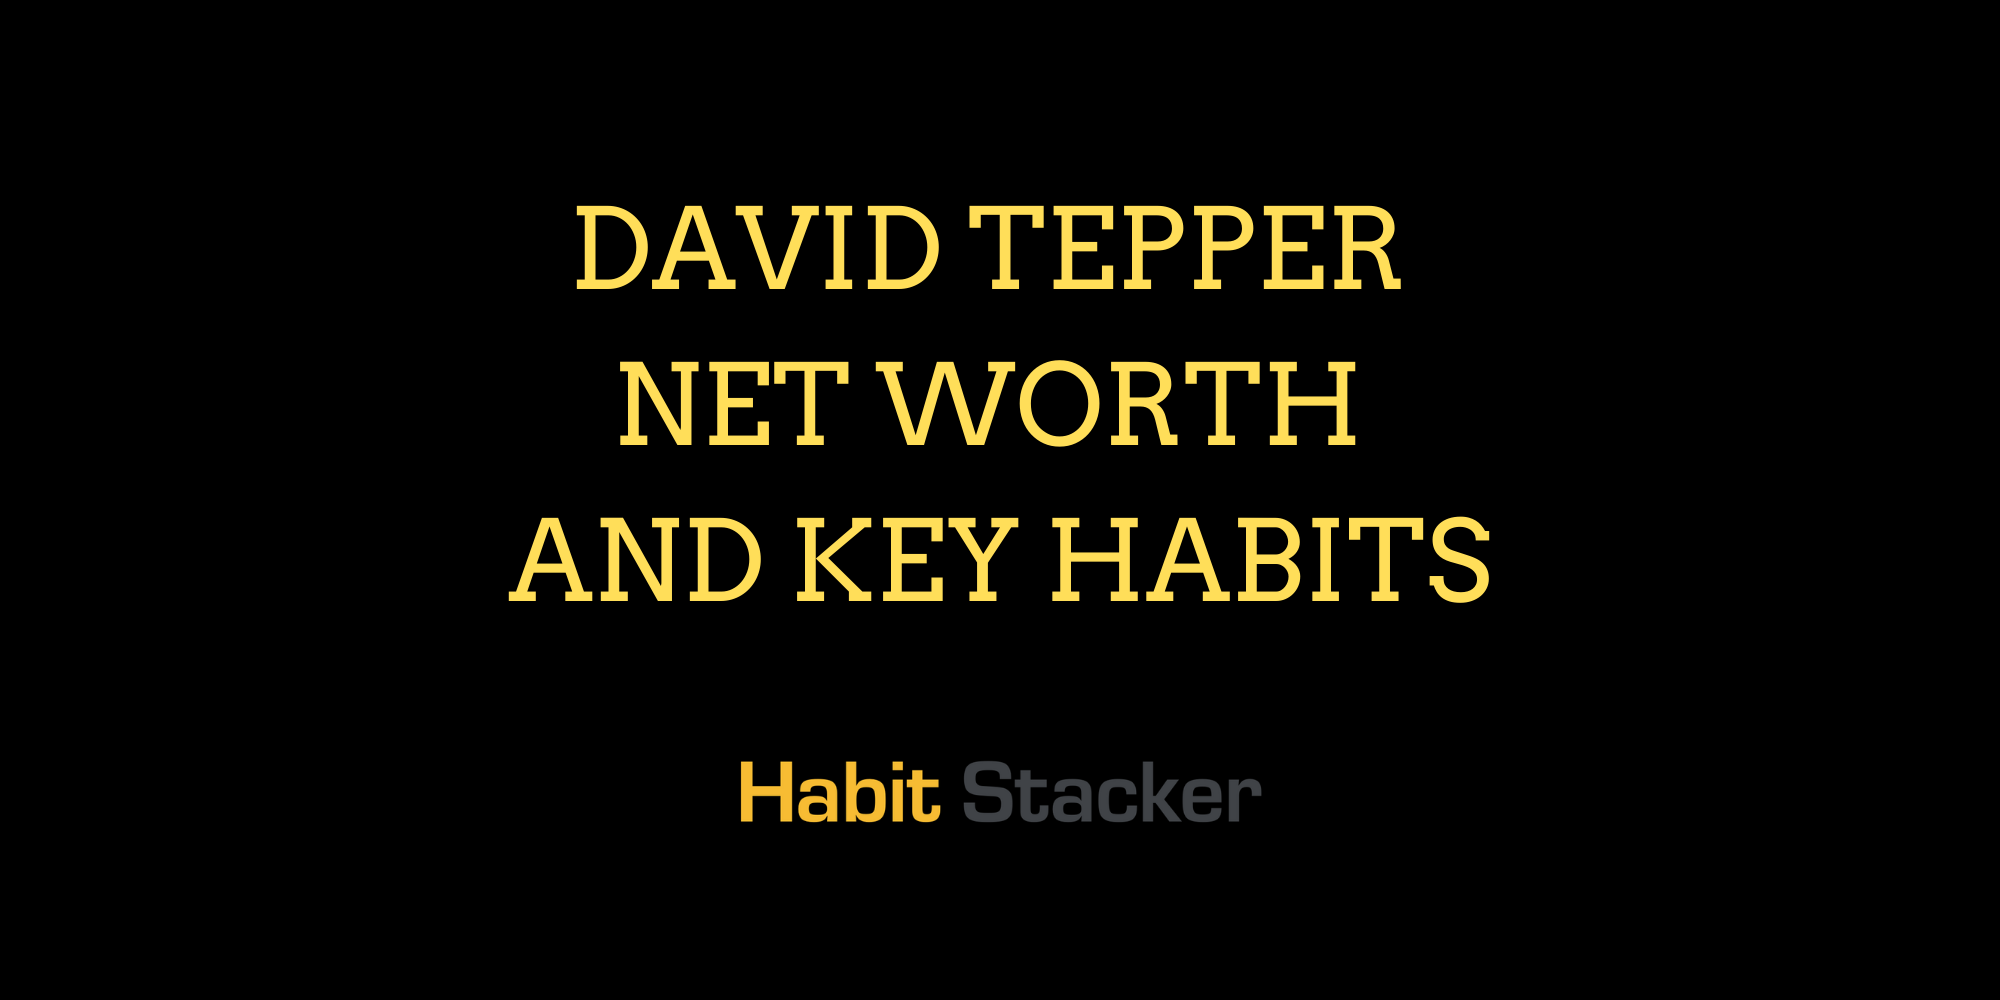 David Tepper Net Worth and Key Habits